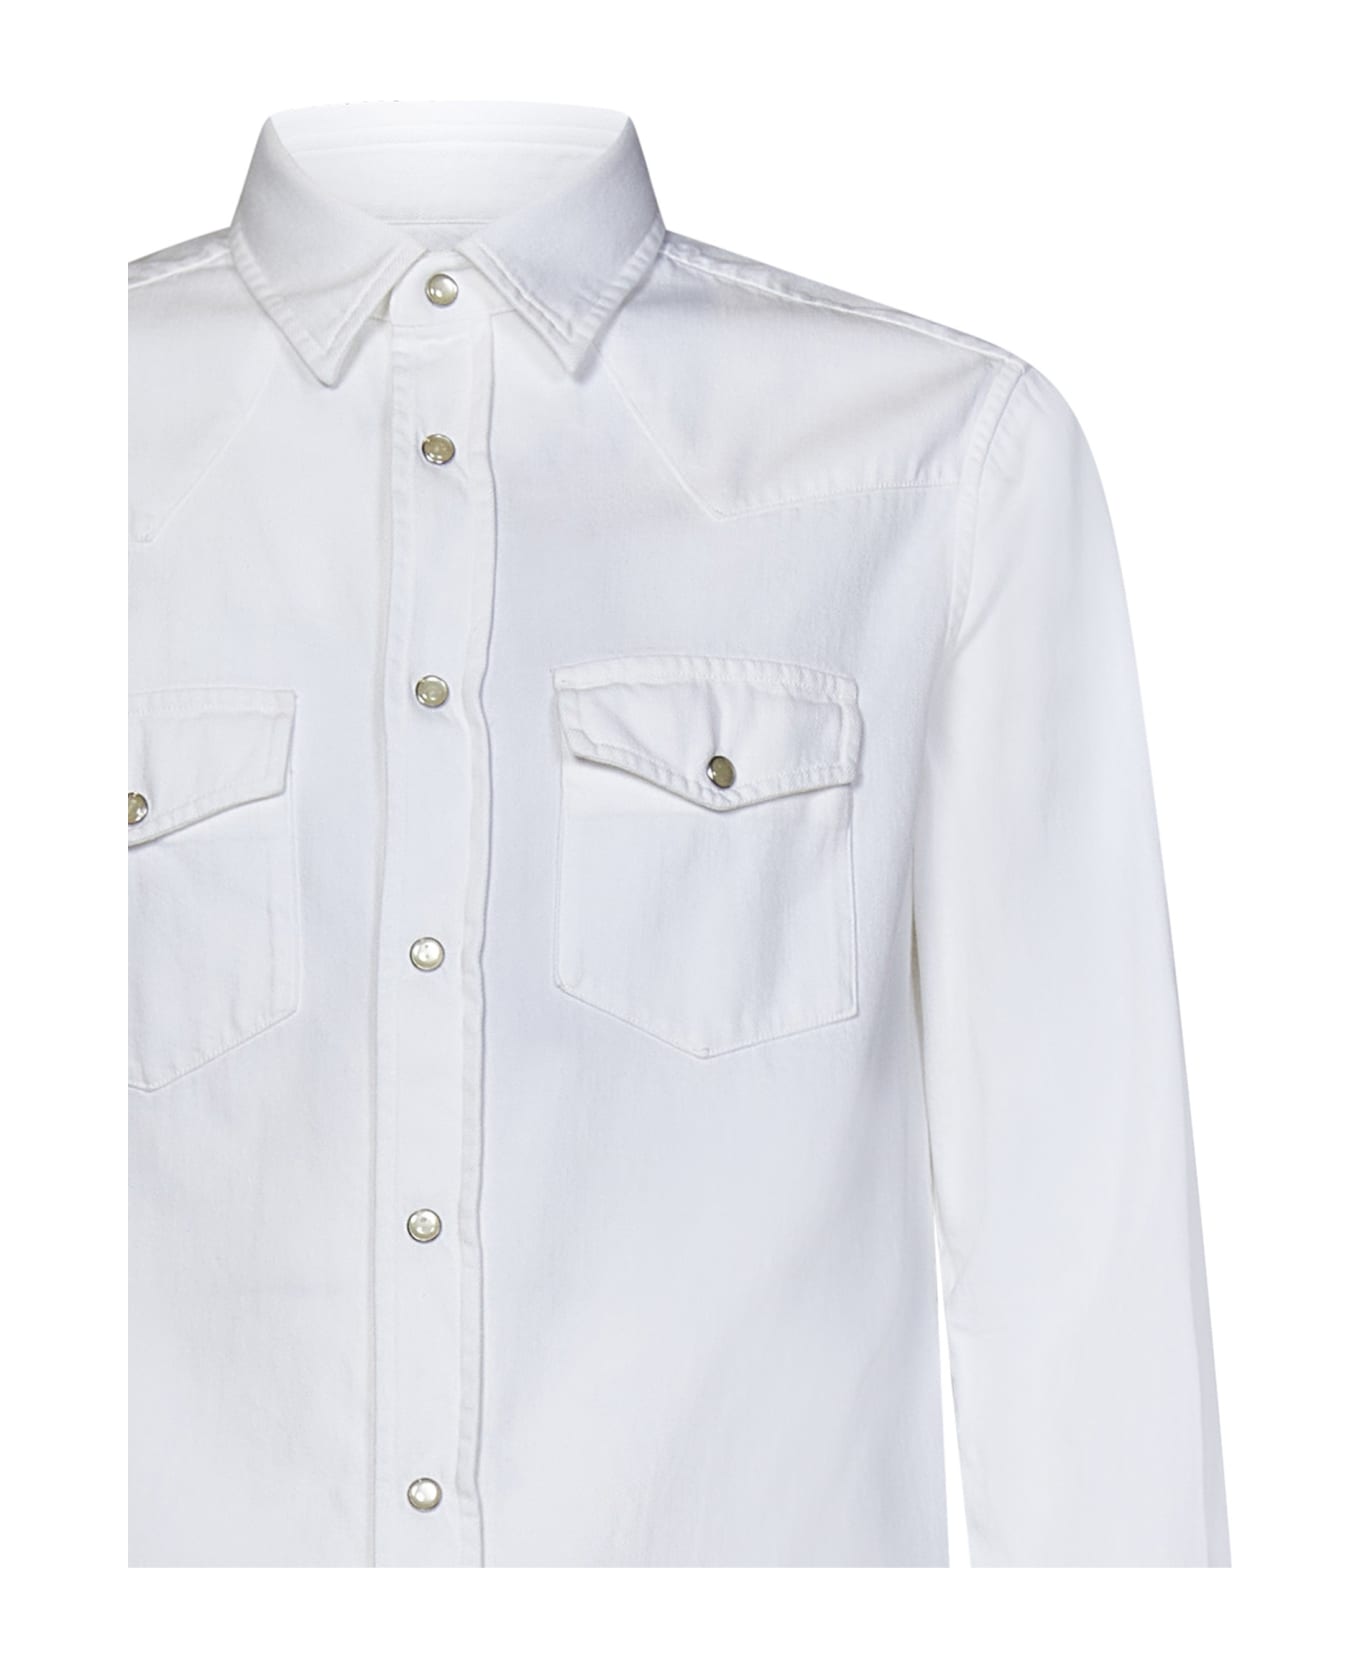 Tom Ford Shirt - White シャツ